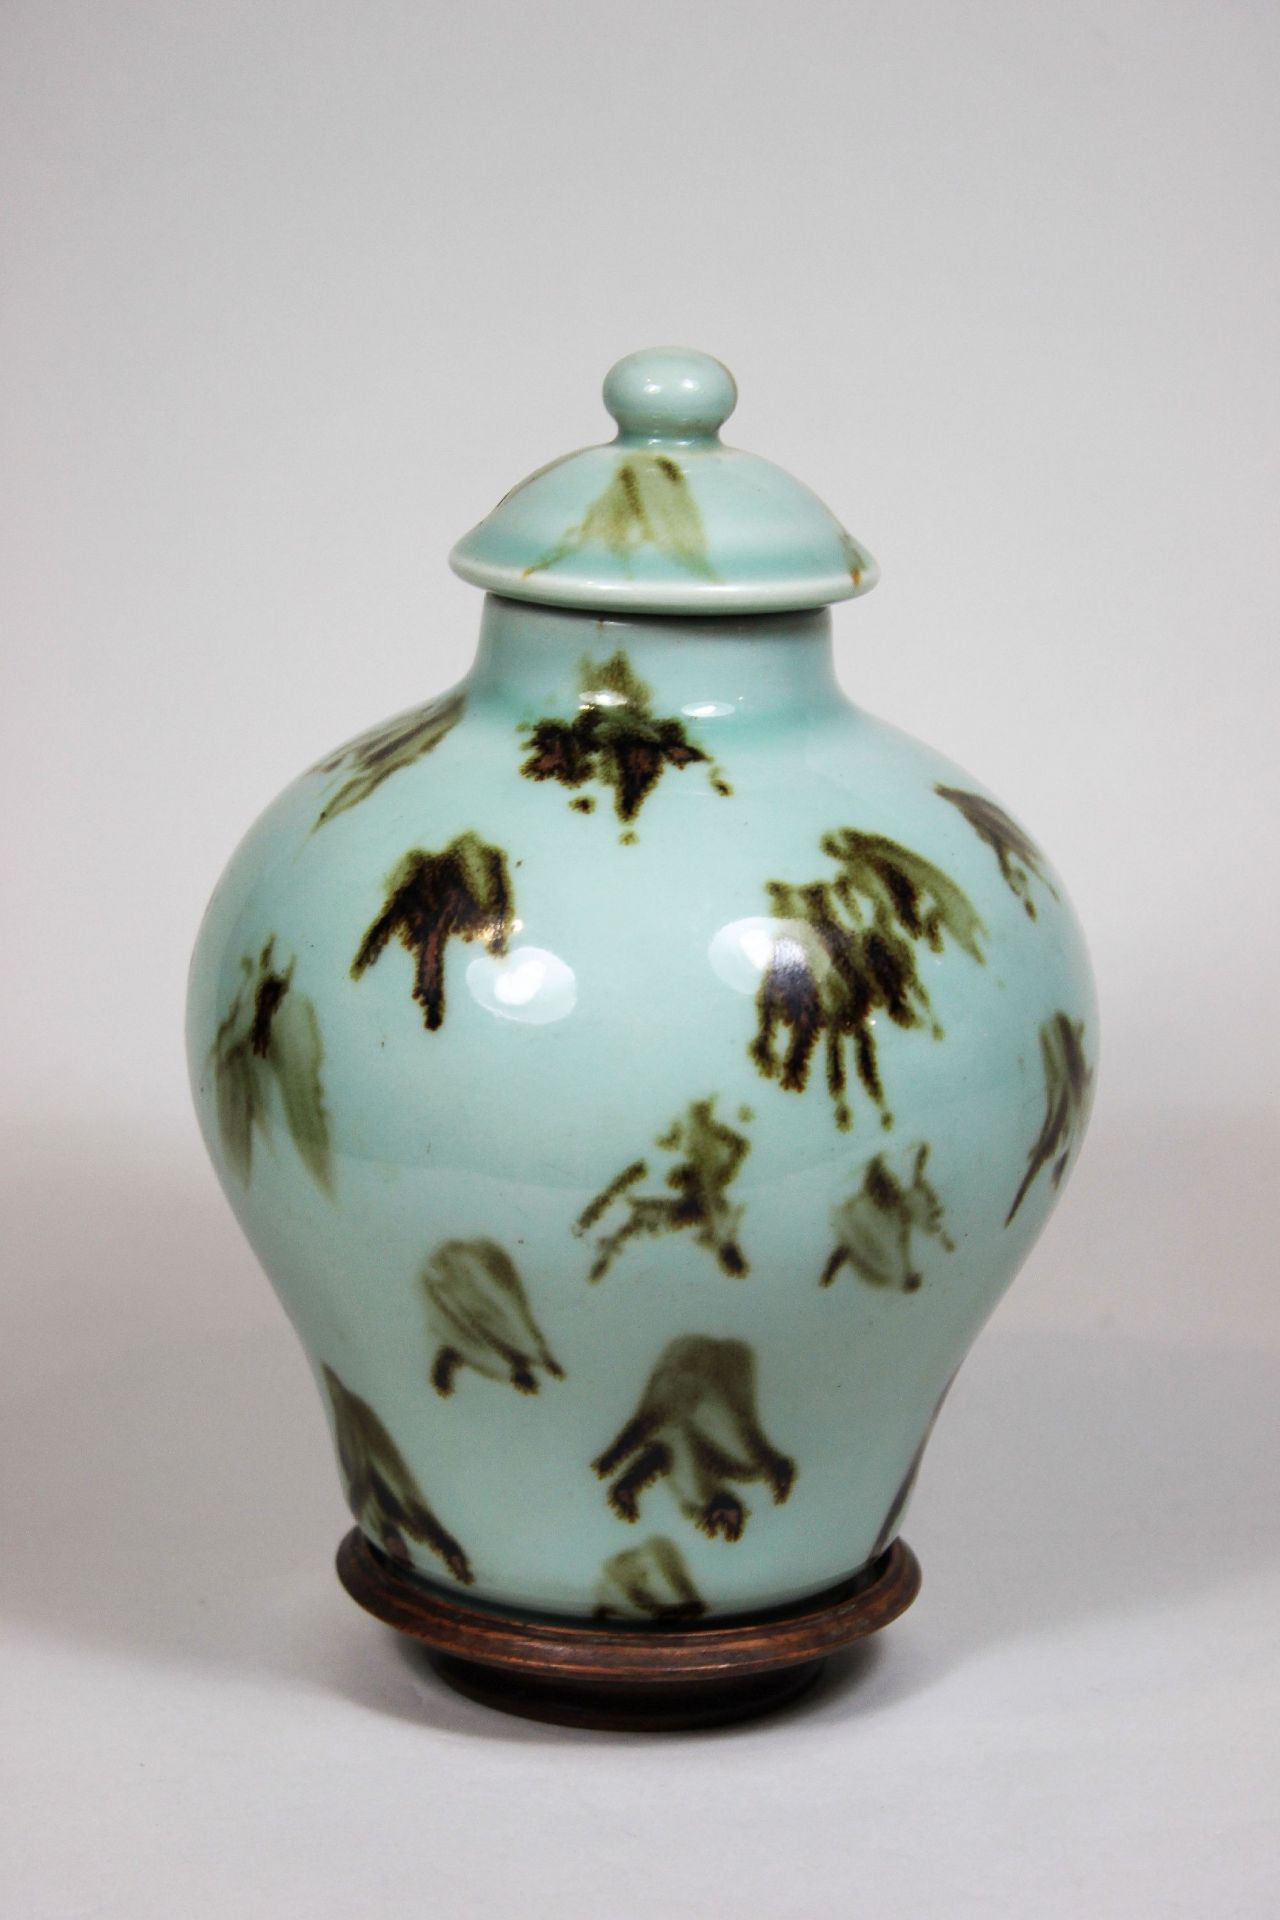 Celadon Vase, China, Qing Dynastie, Kangxi Periode (1890-1910), Porzellan, mit braunen Aplikationen